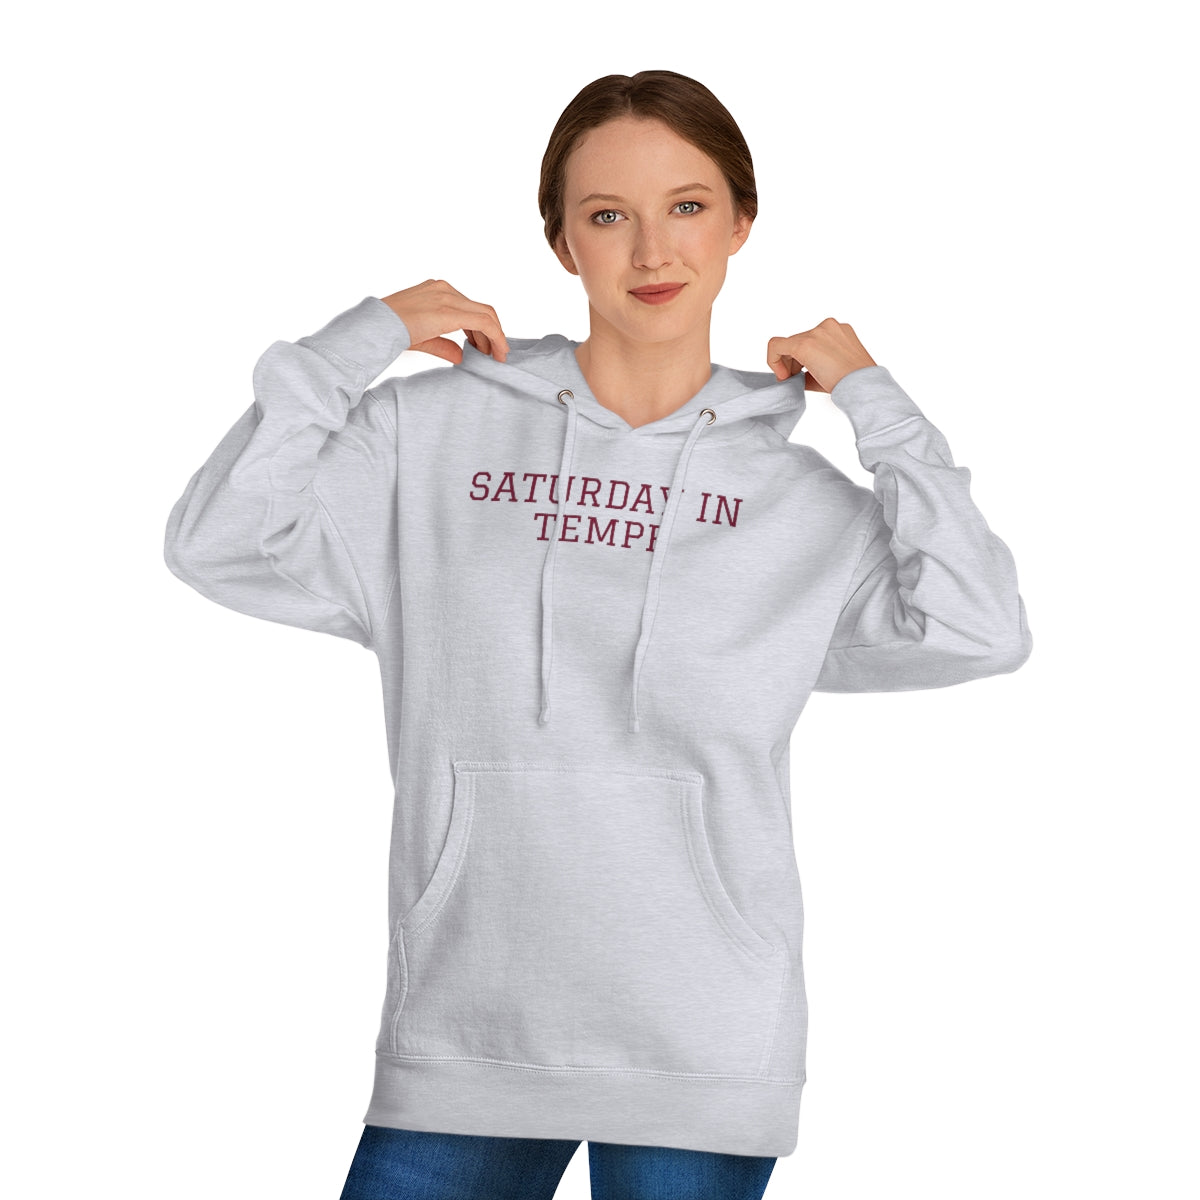 Arizona State Hooded Sweatshirt - GG - ITC